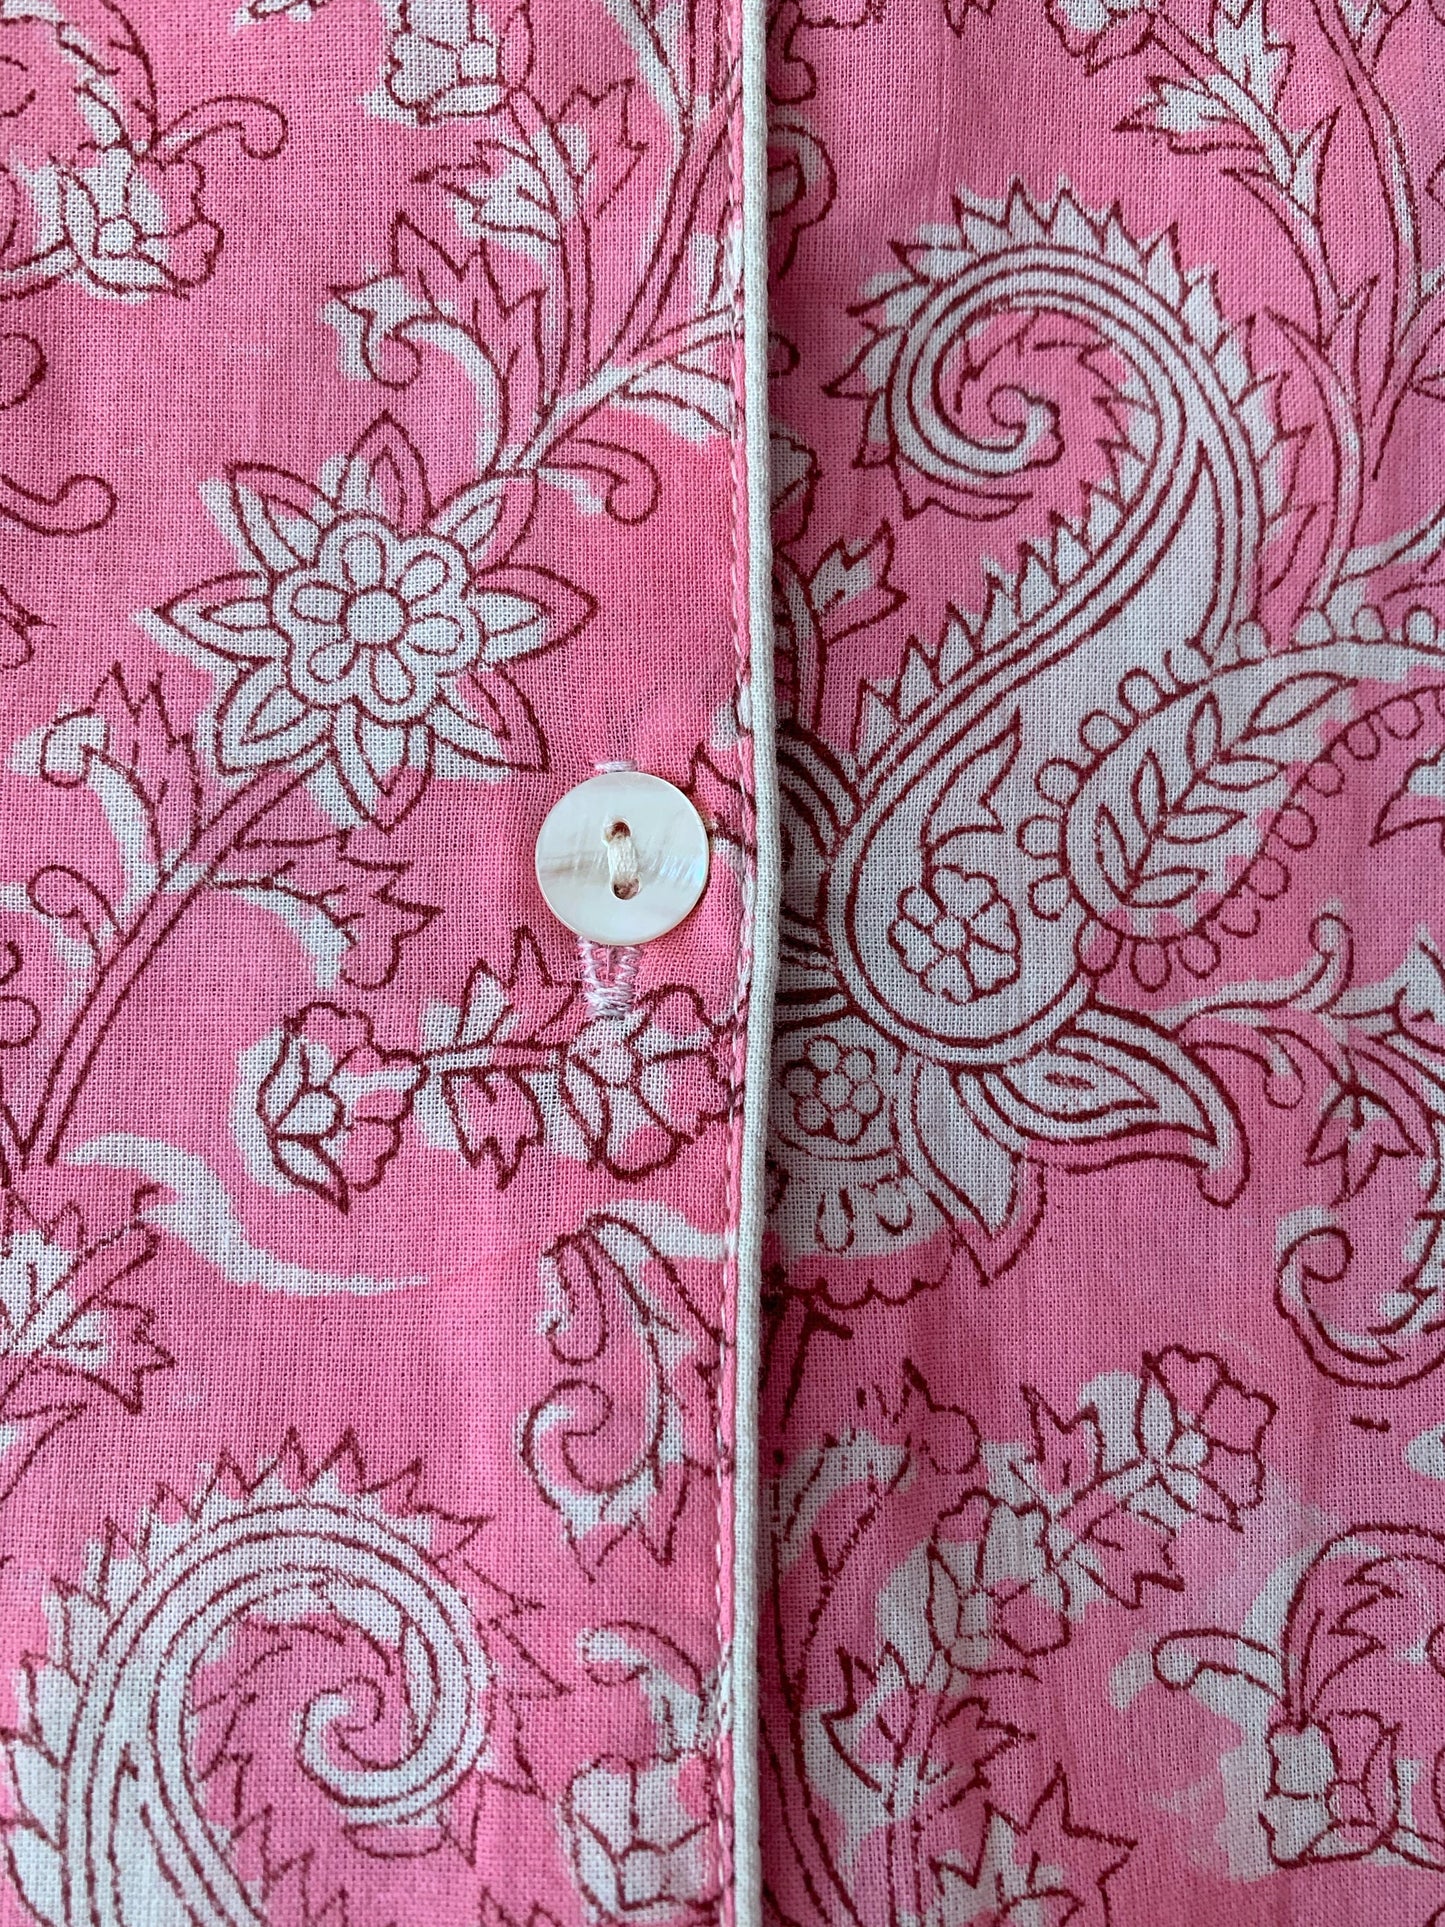 Pijama manga y pantalón largos · Algodón puro estampado block print artesanal en India · Pijama invierno algodón 100% · Rosa cachemir blanco